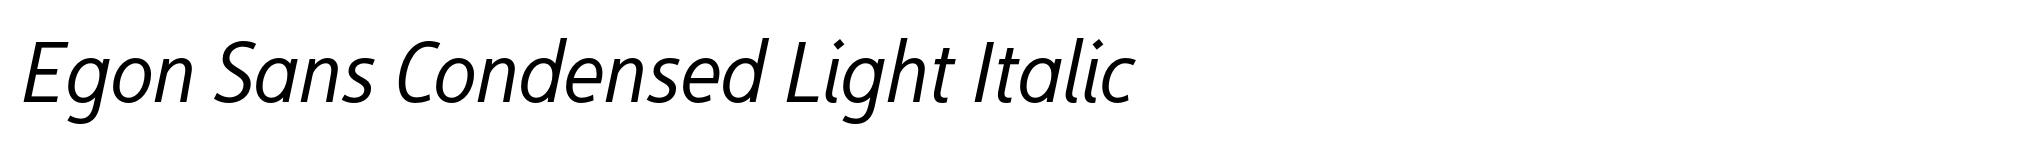 Egon Sans Condensed Light Italic image